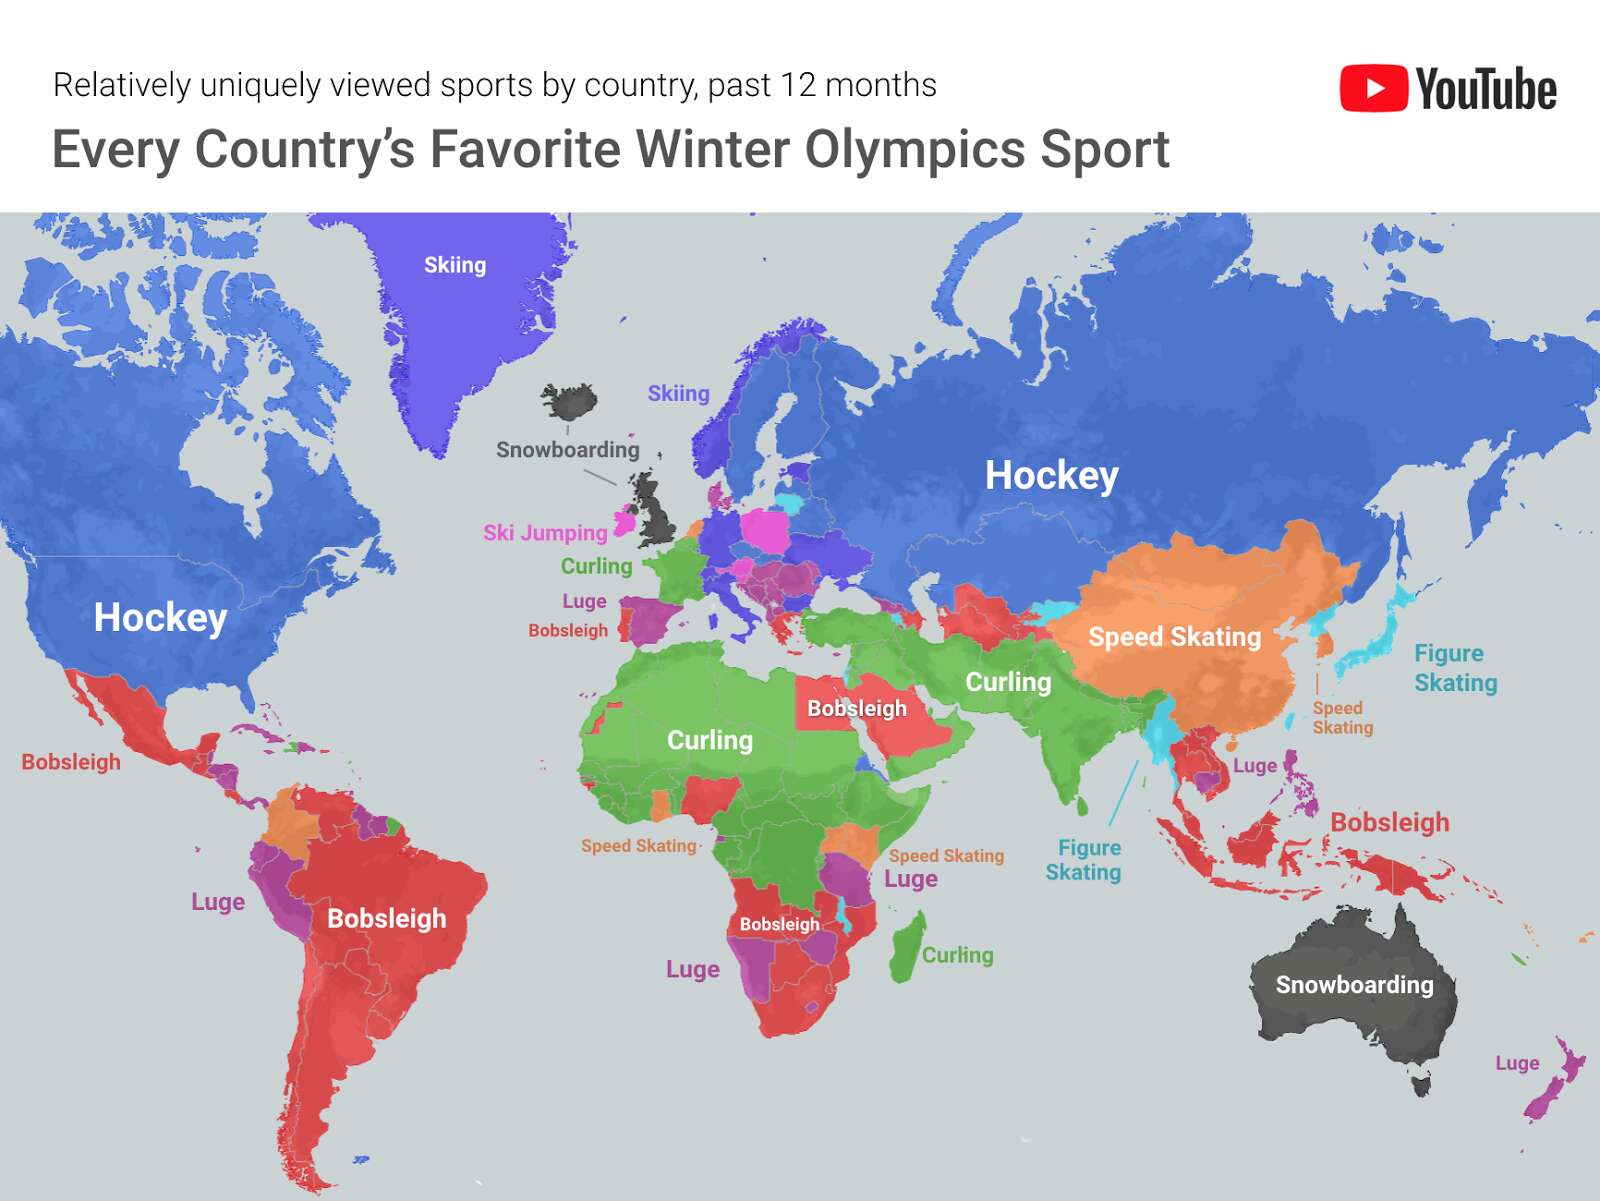 most popular winter olympic sport